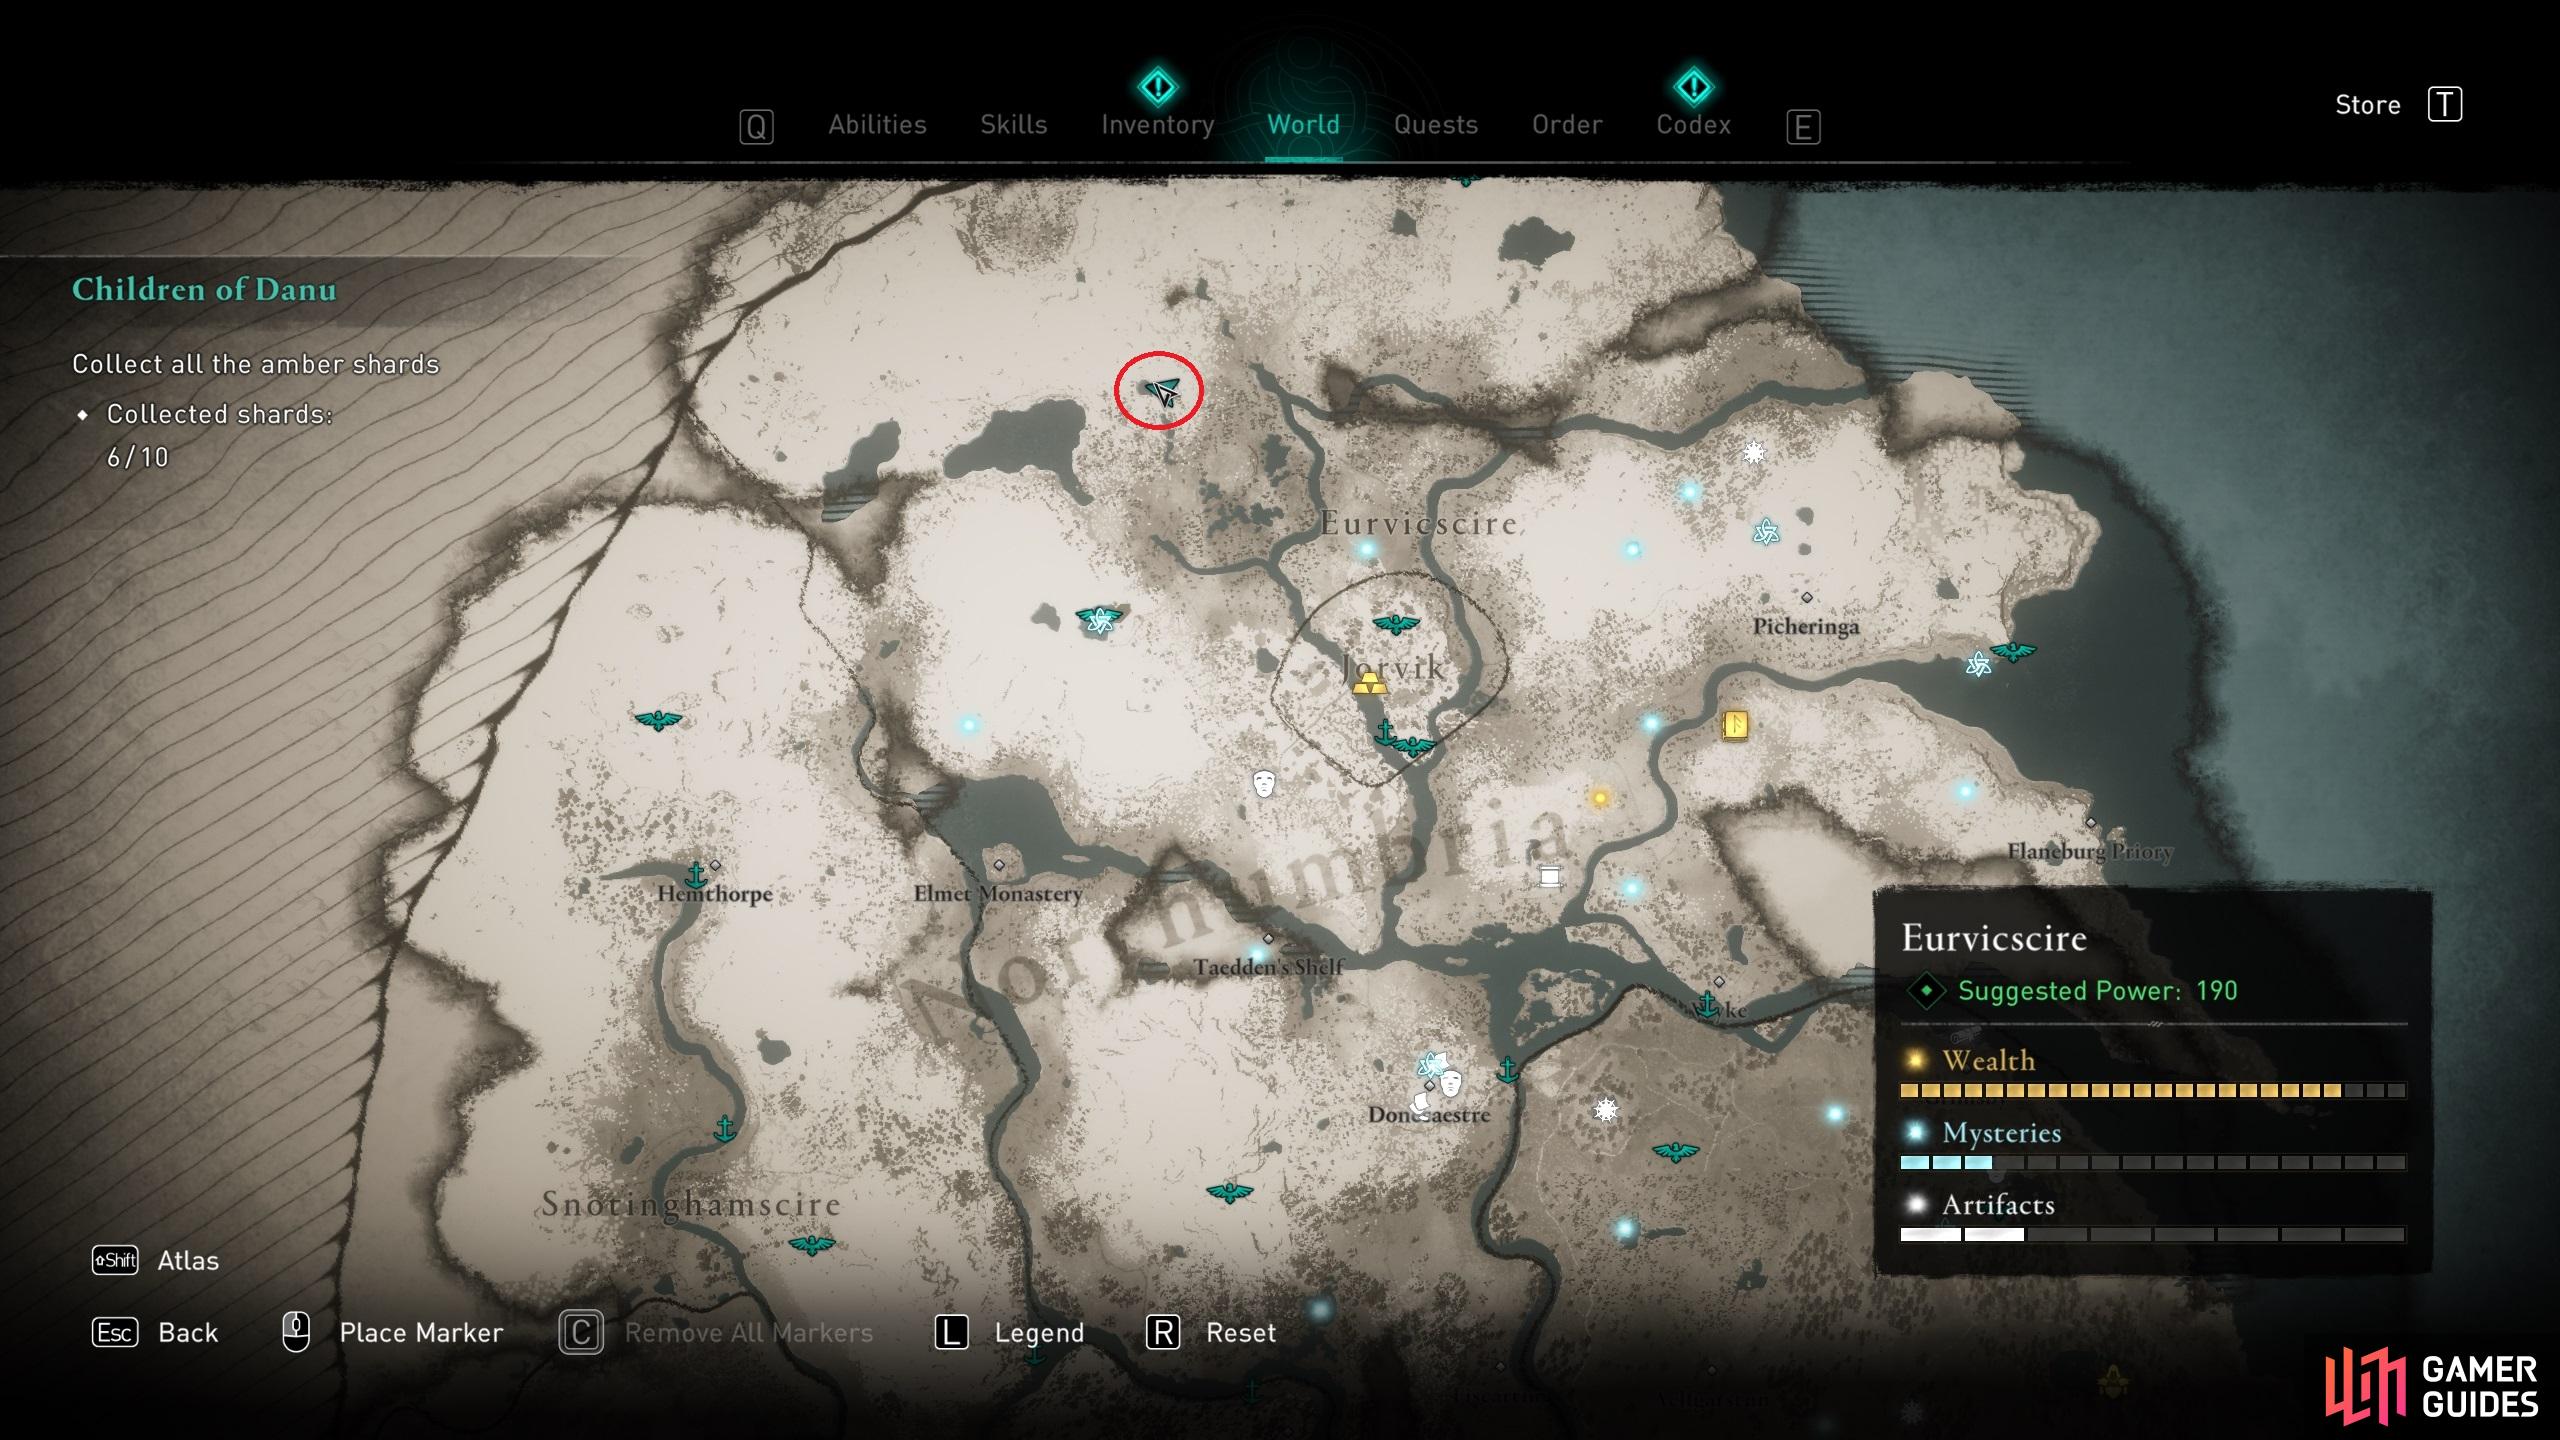 Treasure Hoard Maps - Eurvicscire - Artifacts, Assassin's Creed: Valhalla